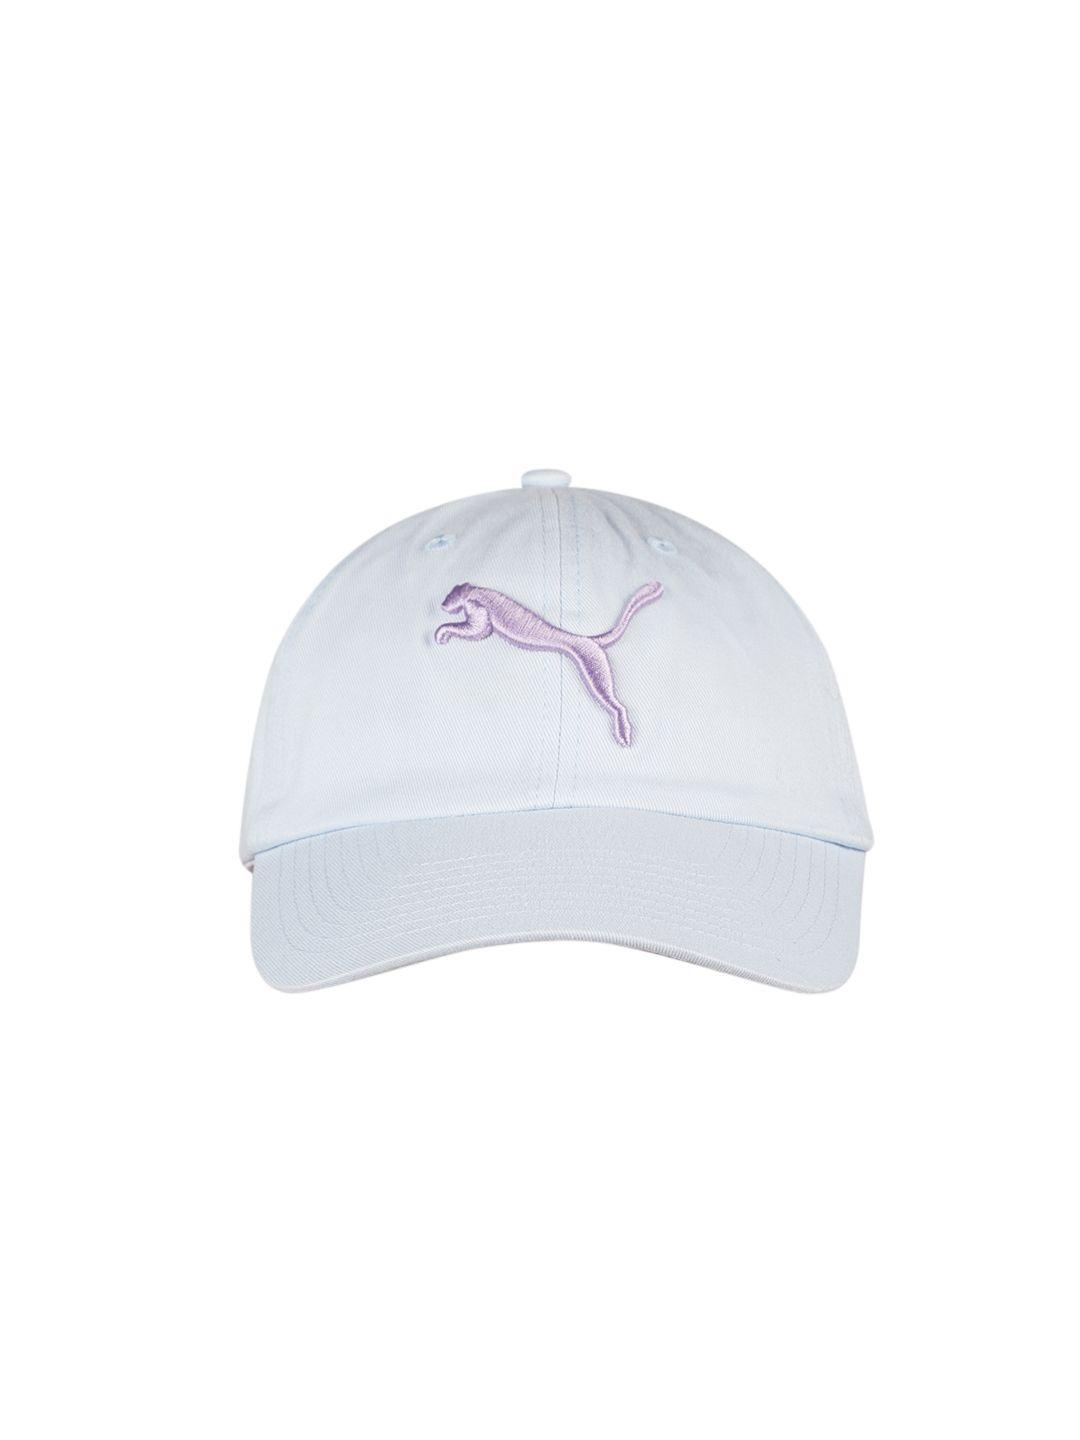 puma unisex embroidered baseball cap